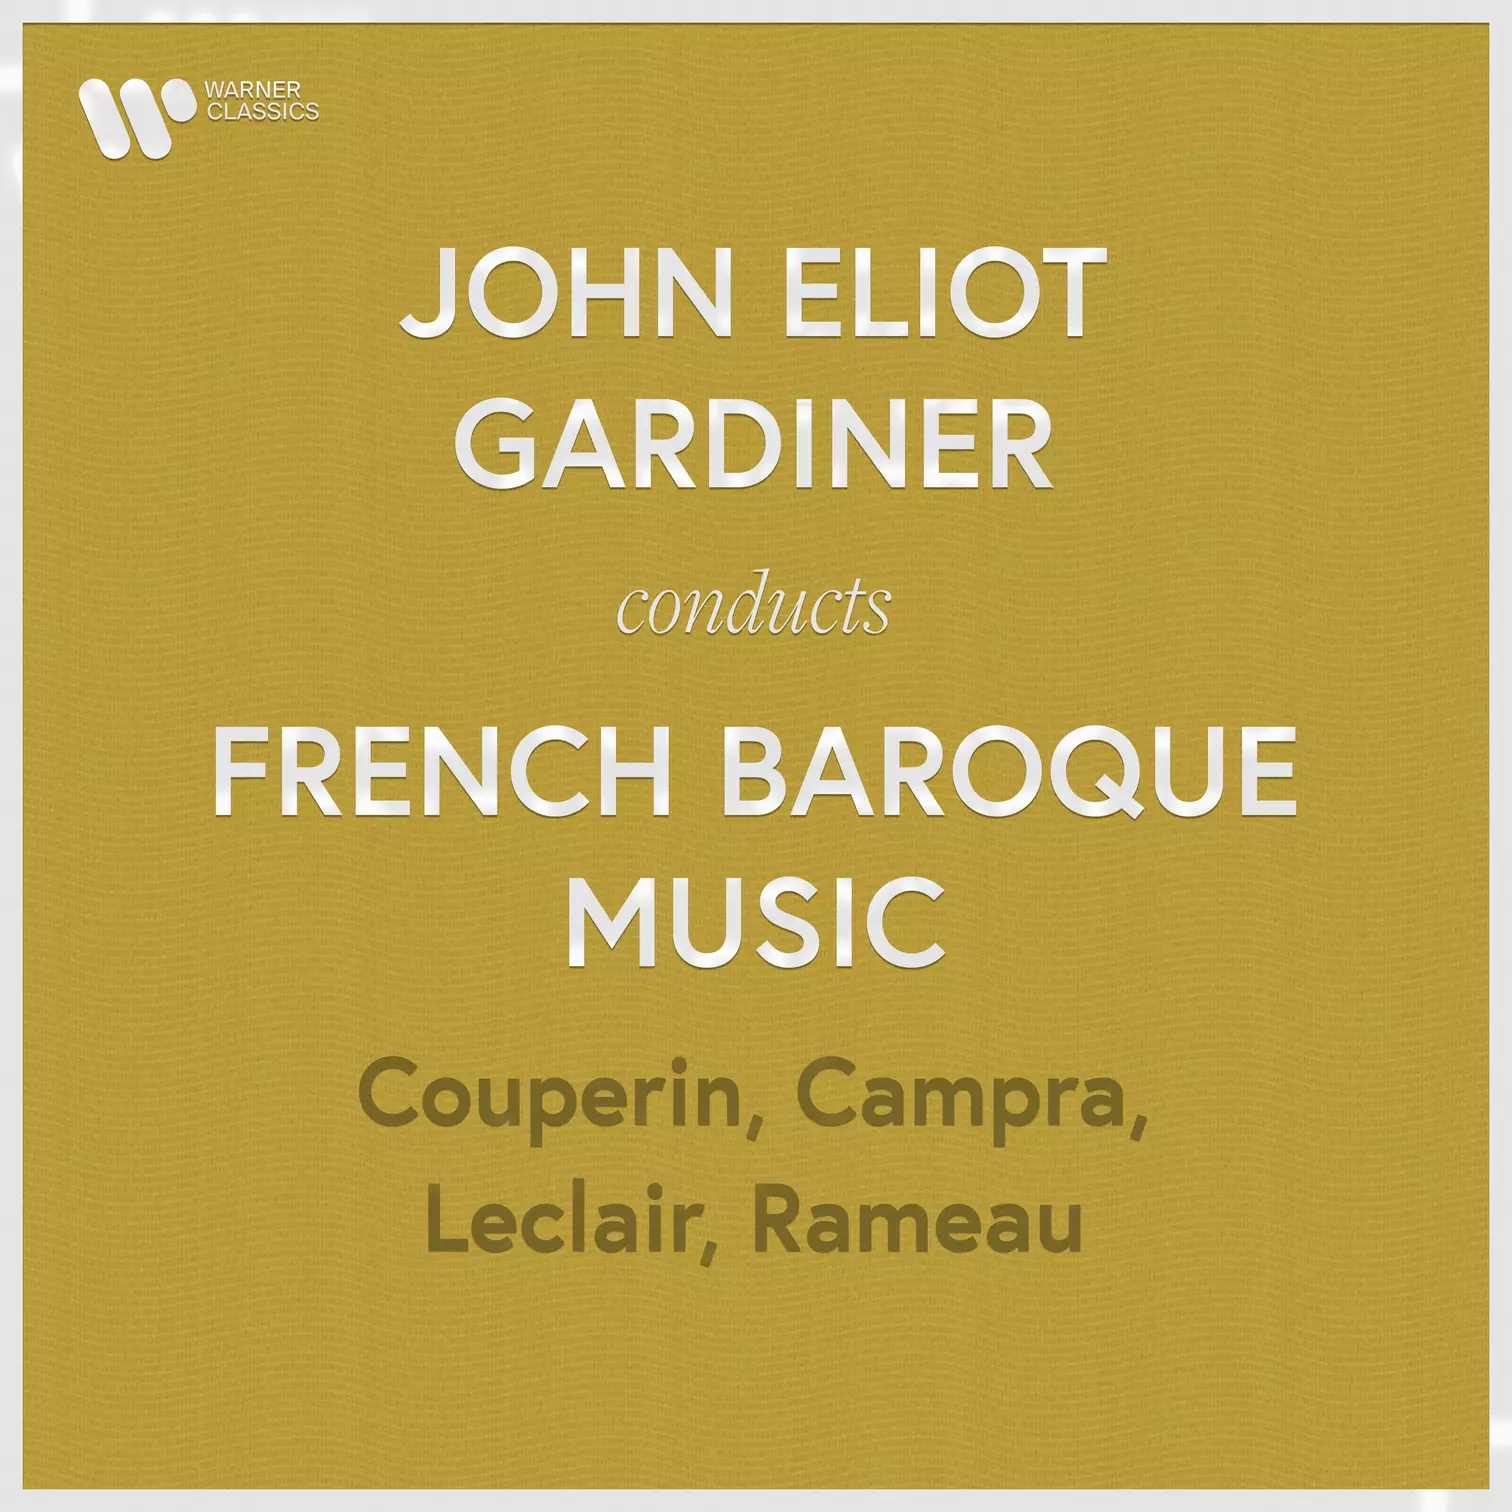 John Eliot Gardiner Conducts French Baroque Music: Couperin, Rameau, Campra, Leclair